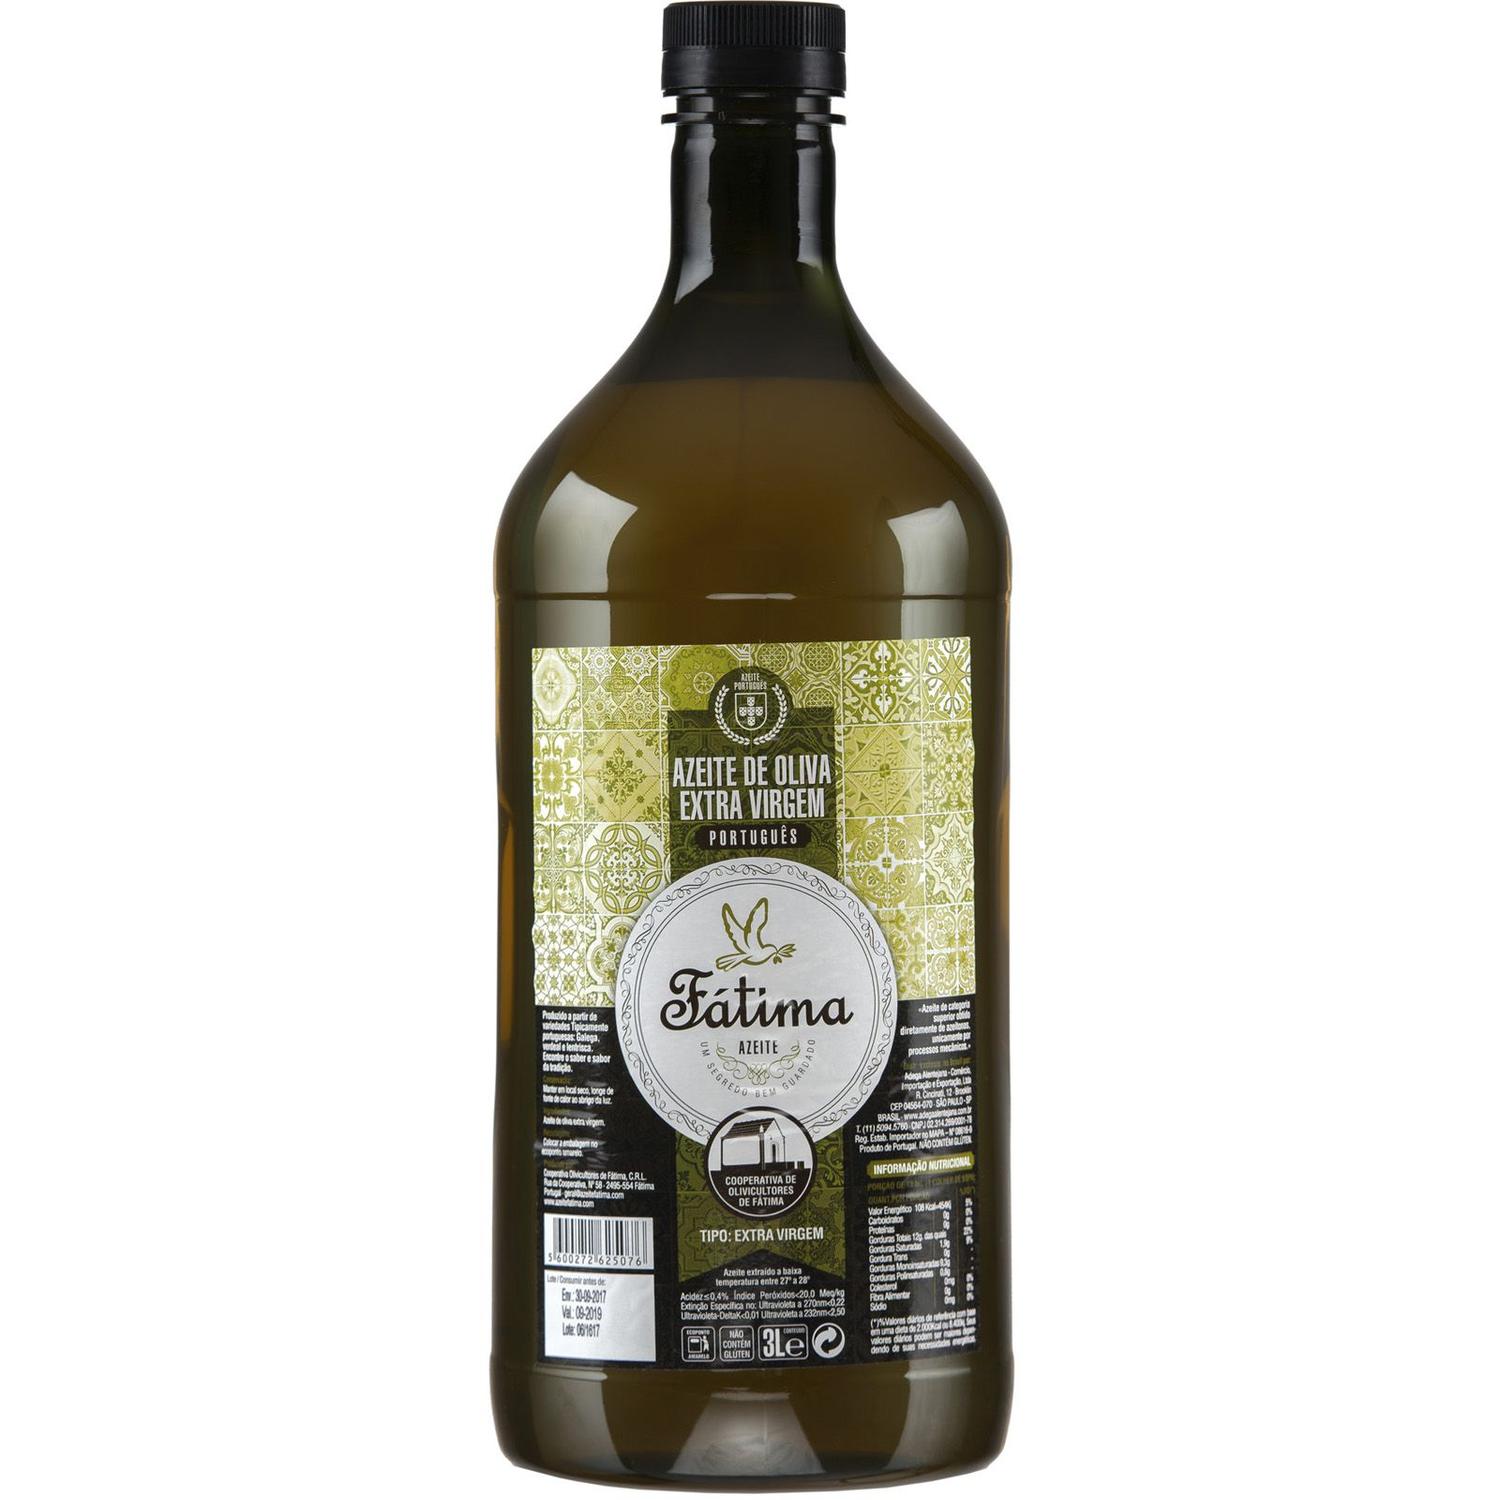 Azeite de oliva fátima extra virgem 3 litros - Azeite - Magazine Luiza